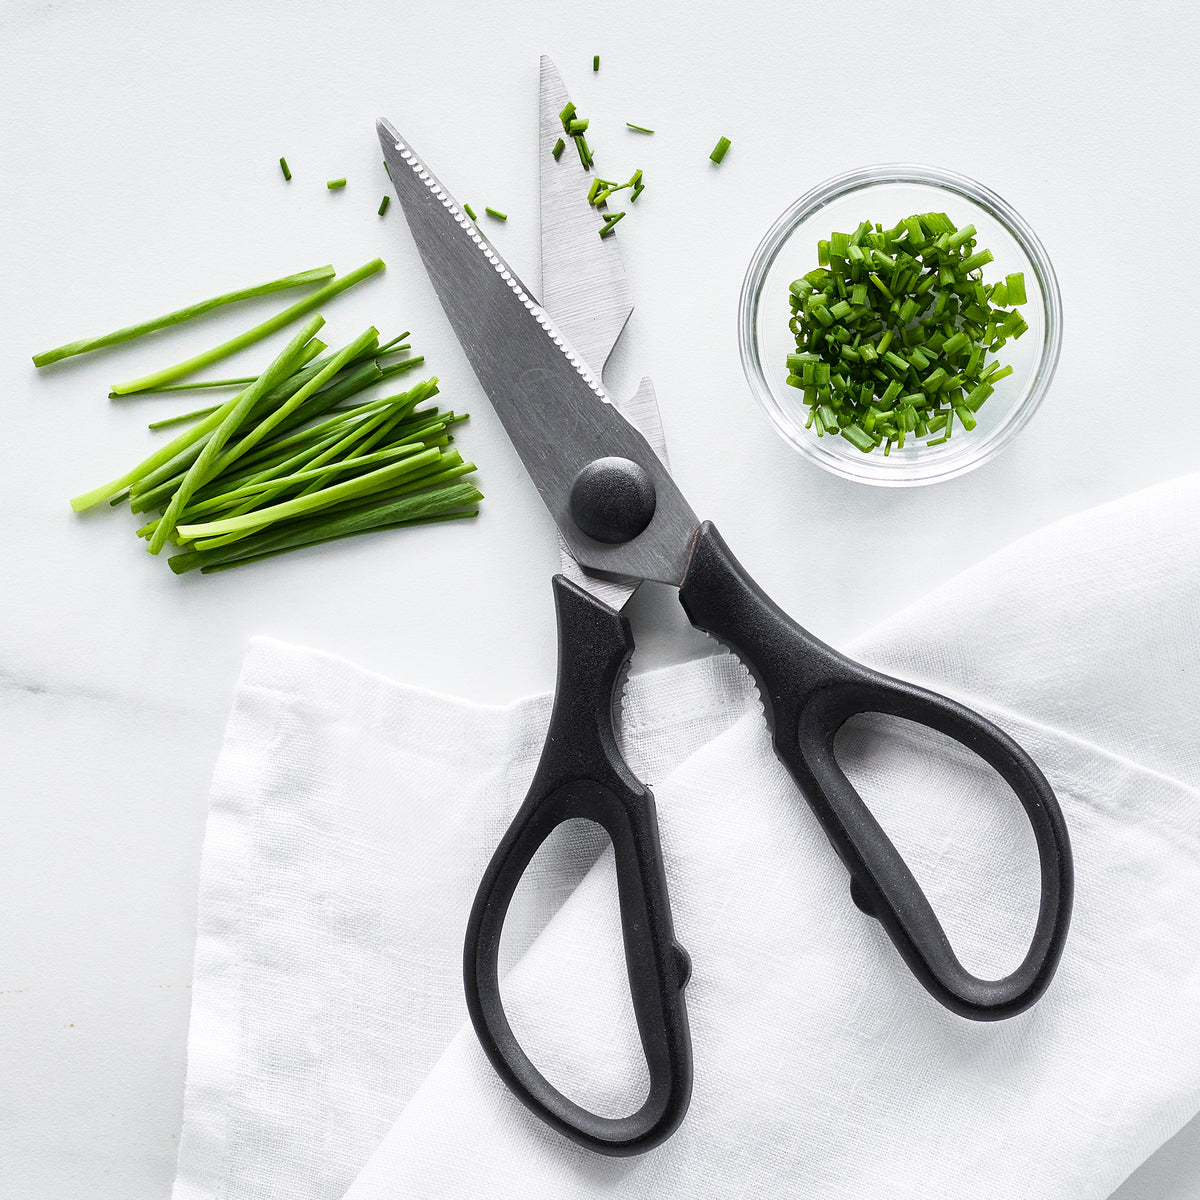 Healthy Non-Toxic PFAS Free Cutlery - Premiere Titanium Cutlery 8-Piece Steak Knife Set with Walnut Handles by GreenPan